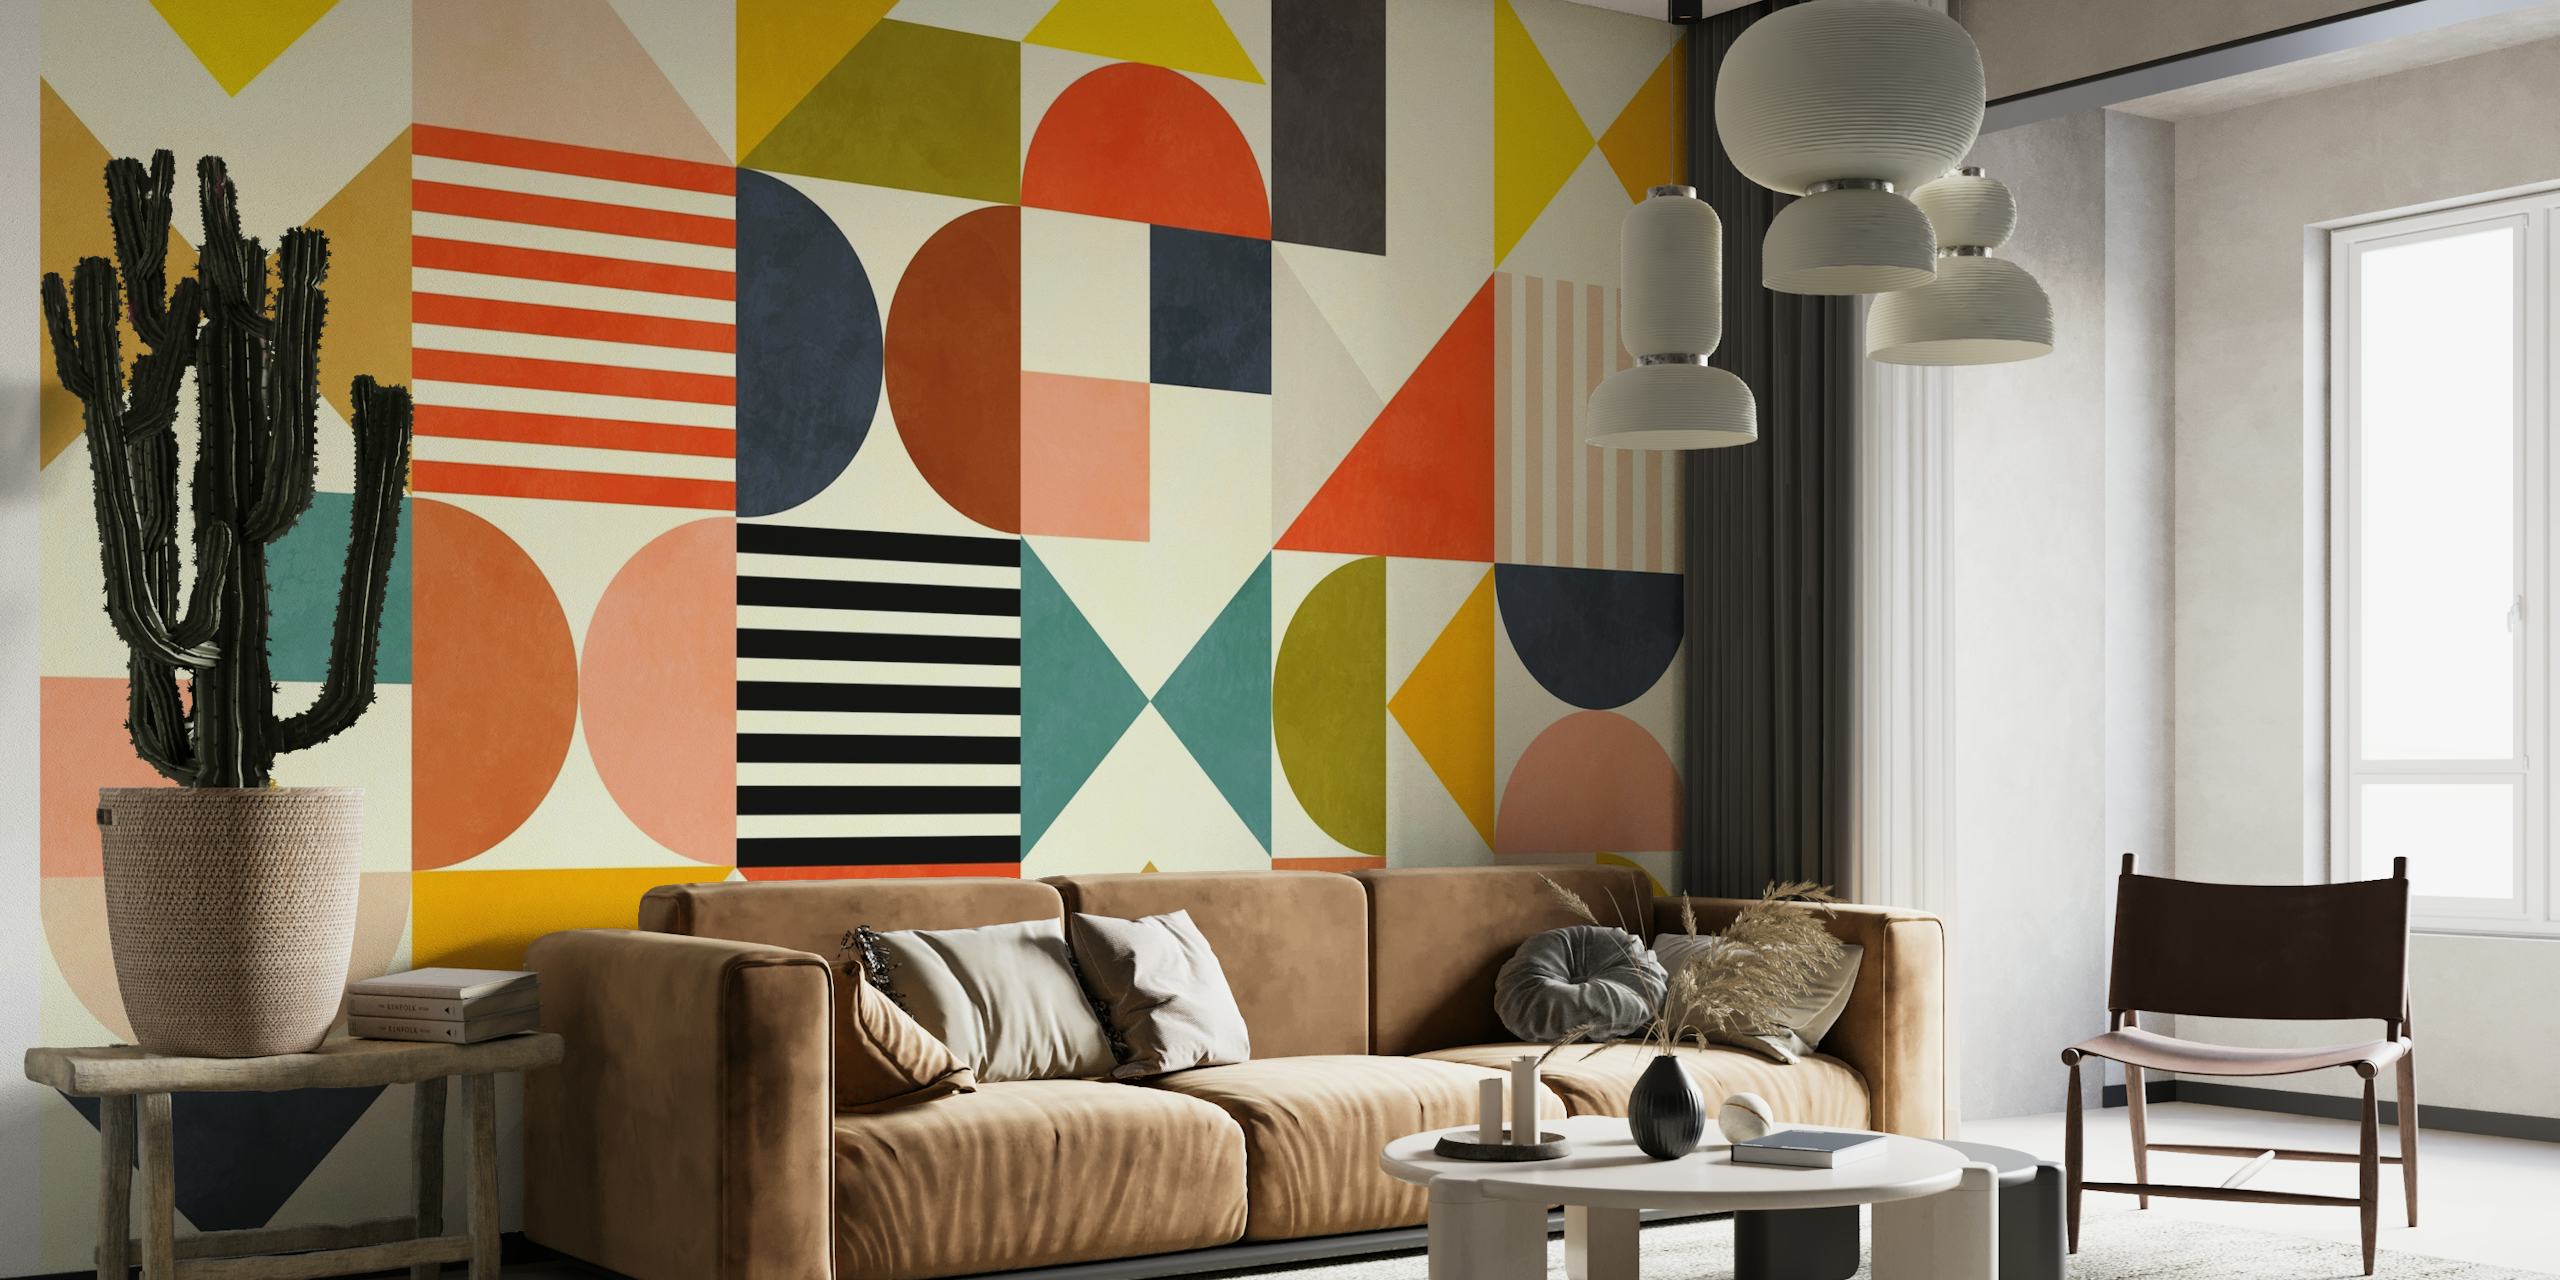 Vibrant geometric Bauhaus design wallpaper